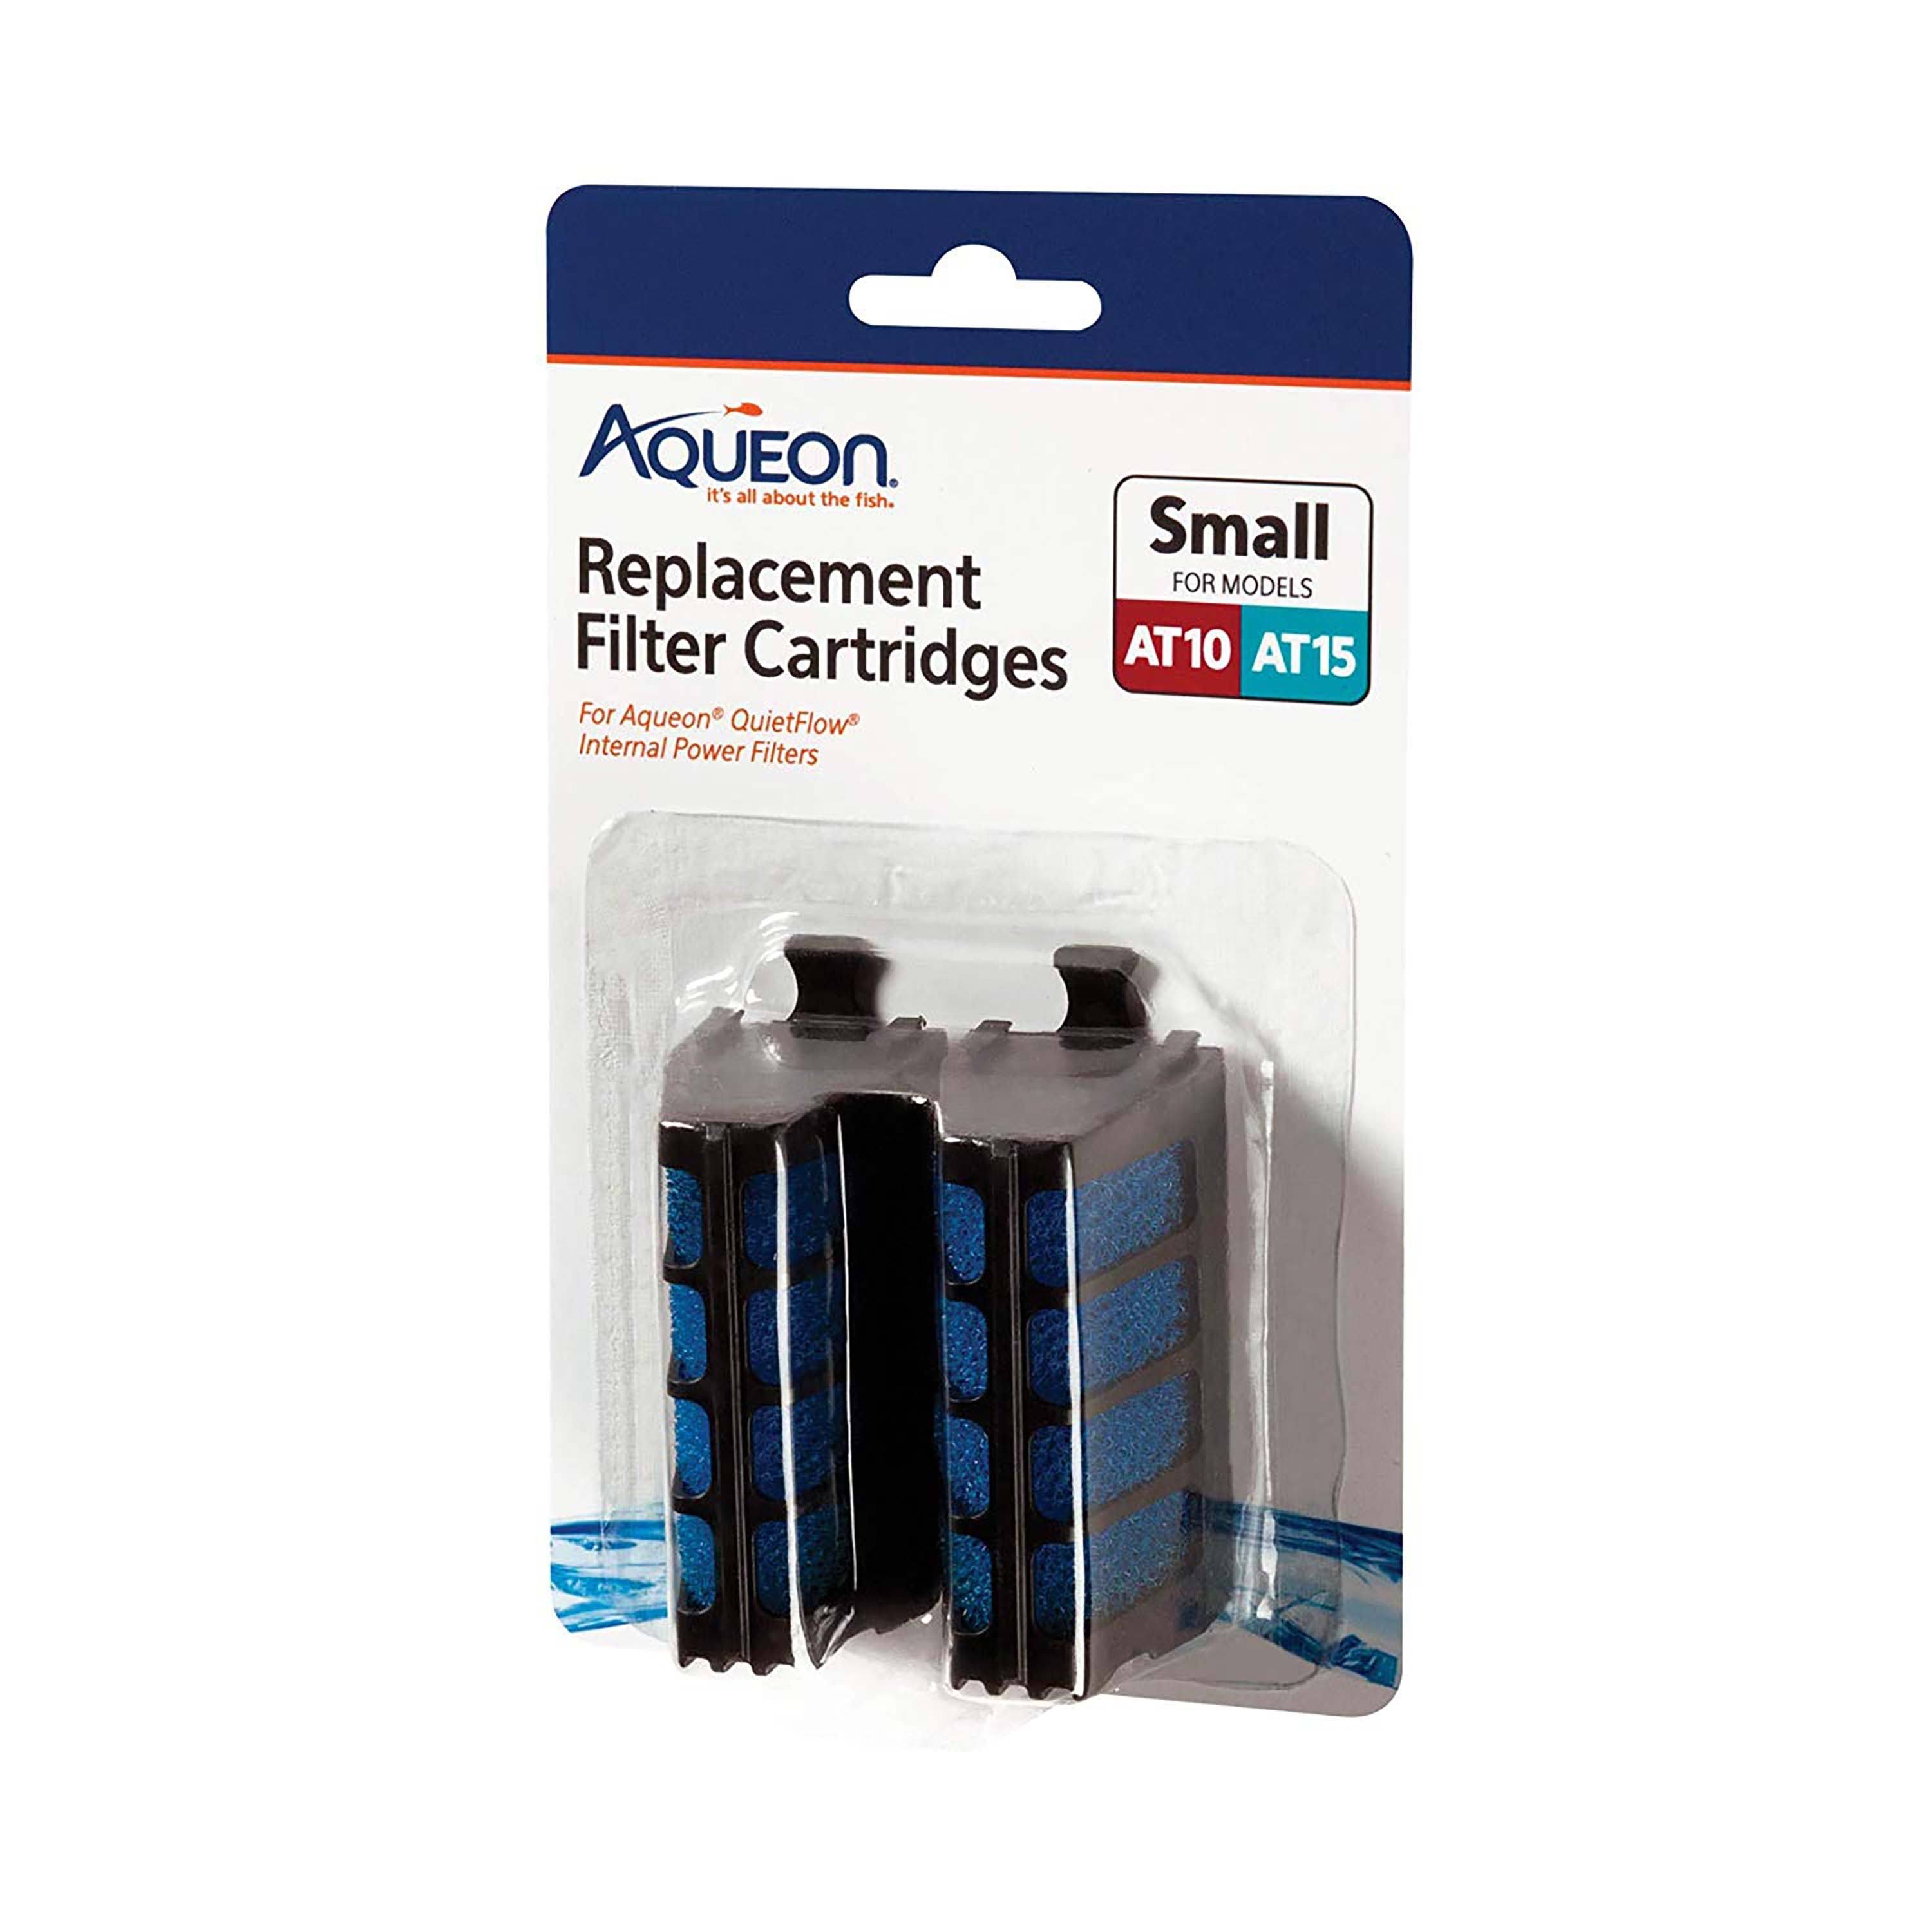 Aqueon QuietFlow Internal Filter Cartridge - Small, 2 Pack